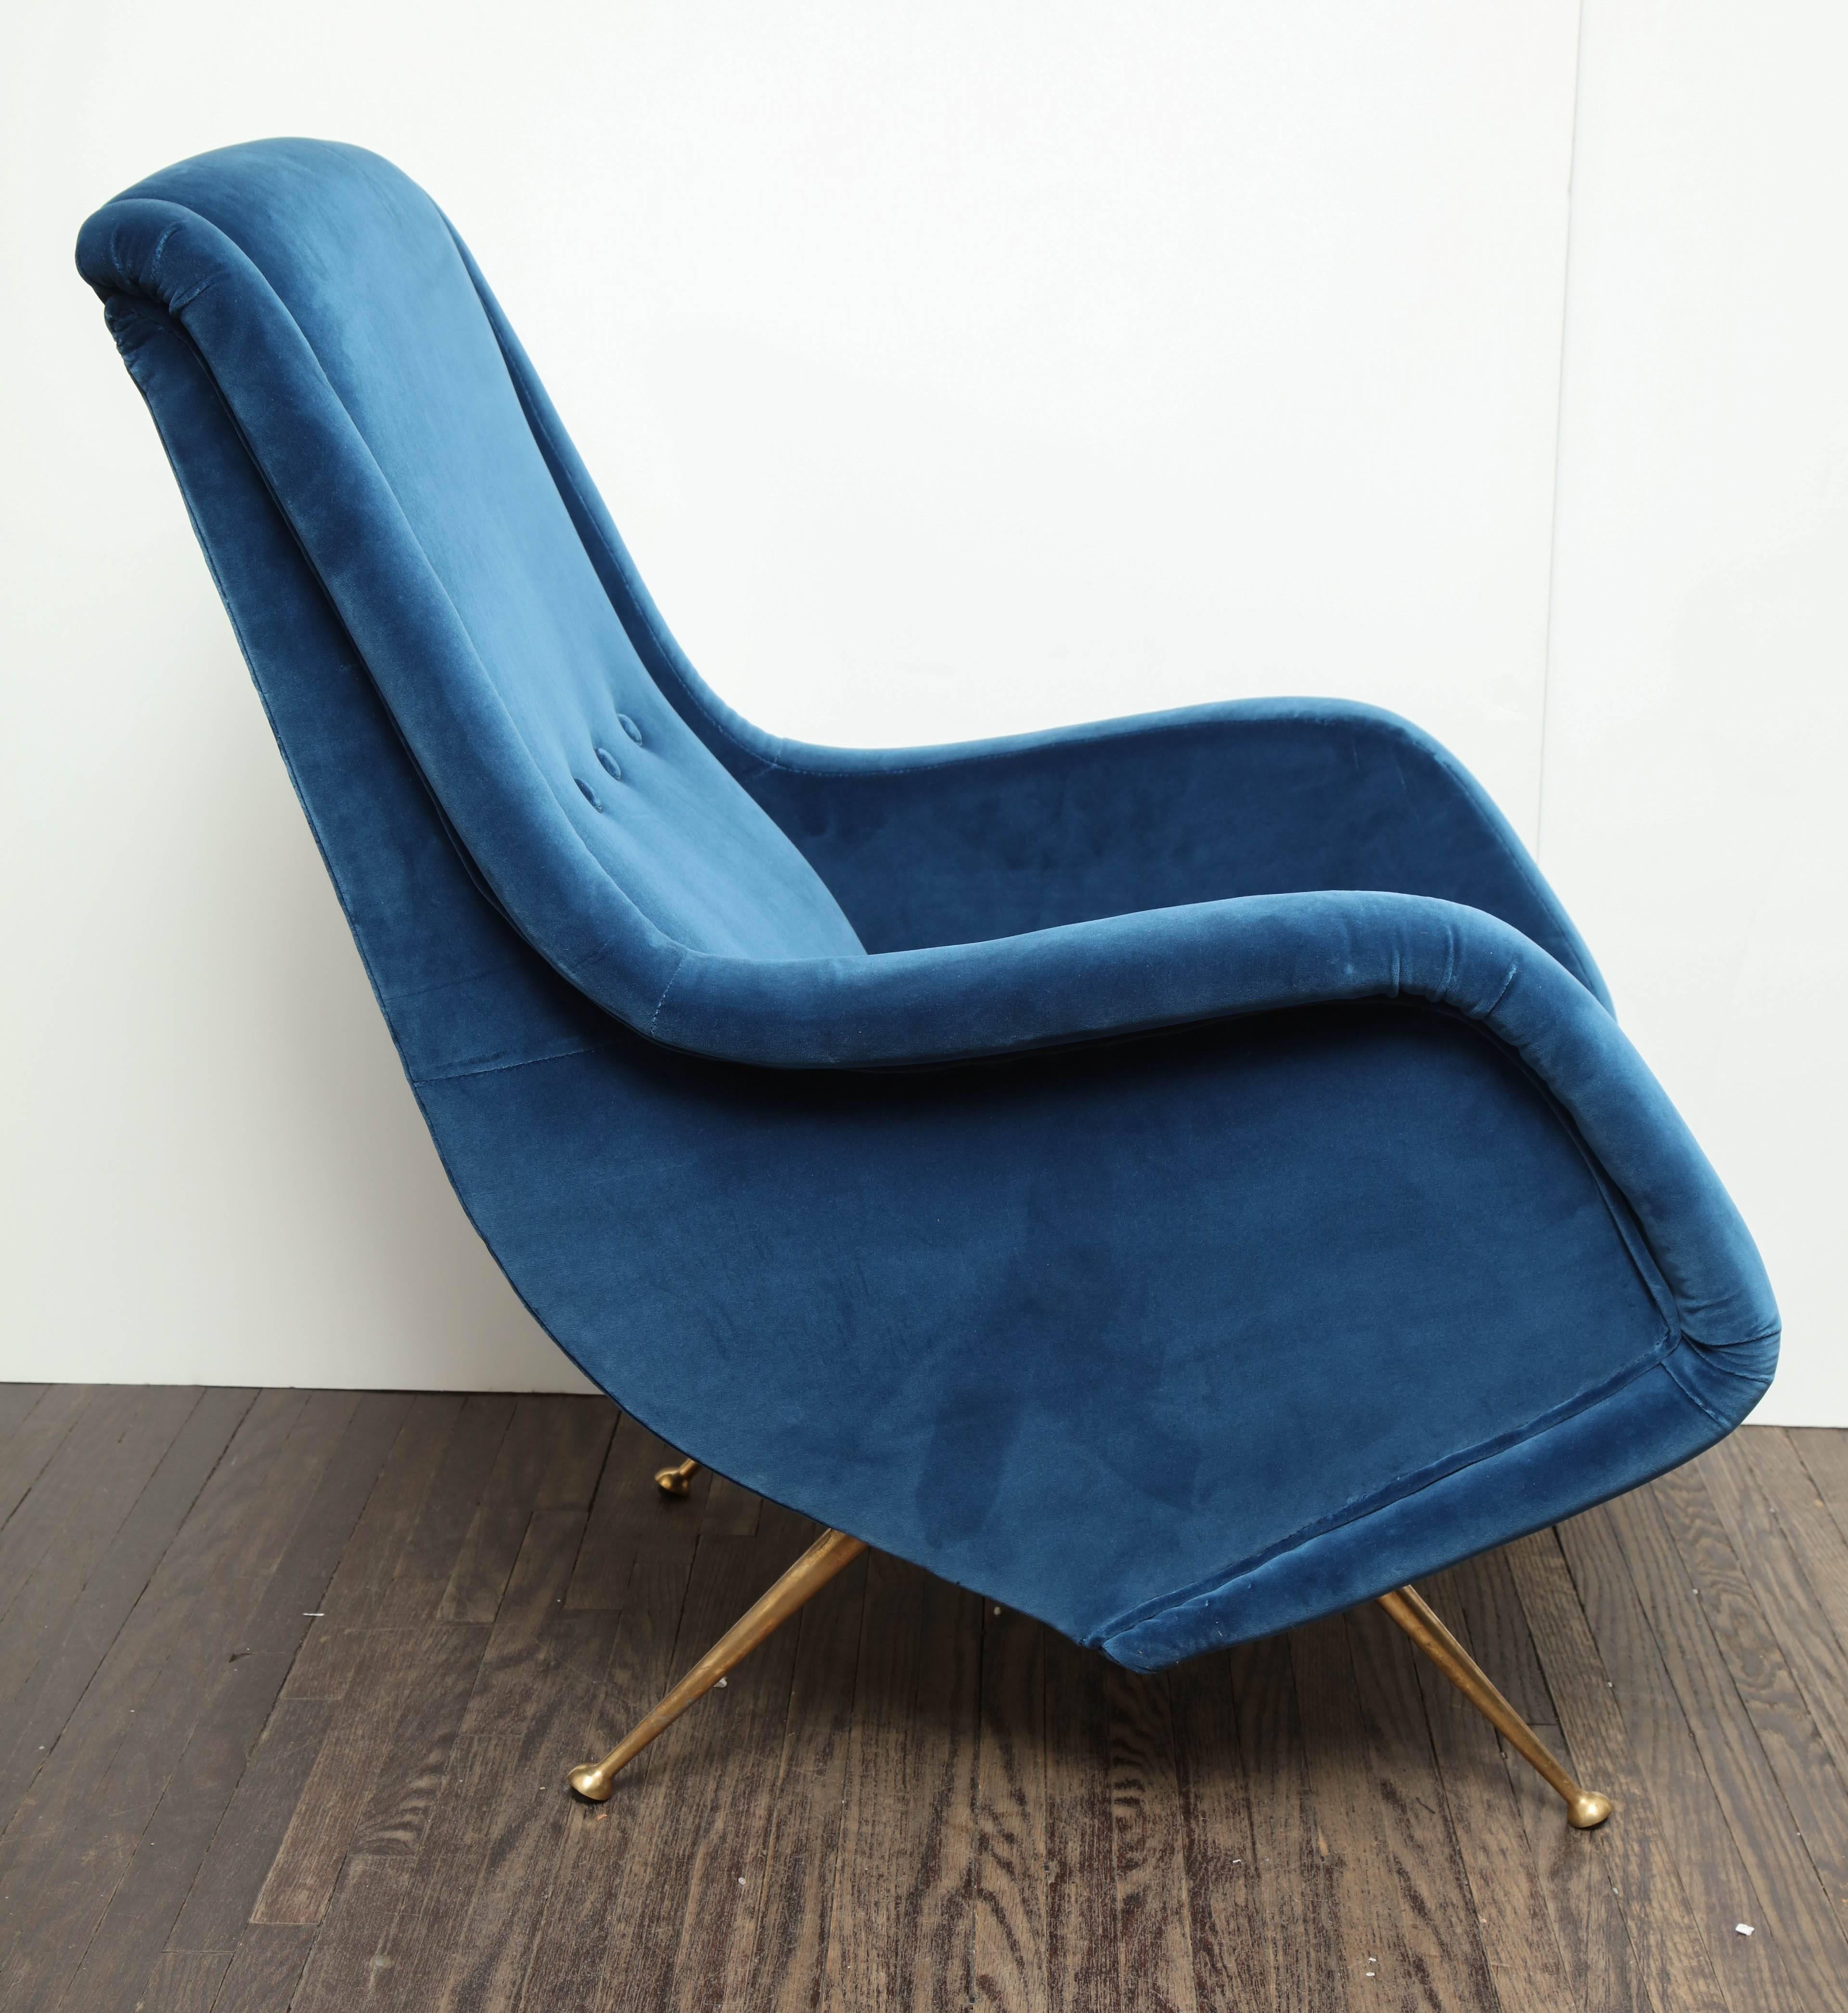 Pair of Parisi Vintage Italian club chairs upholstered in teal blue velvet.